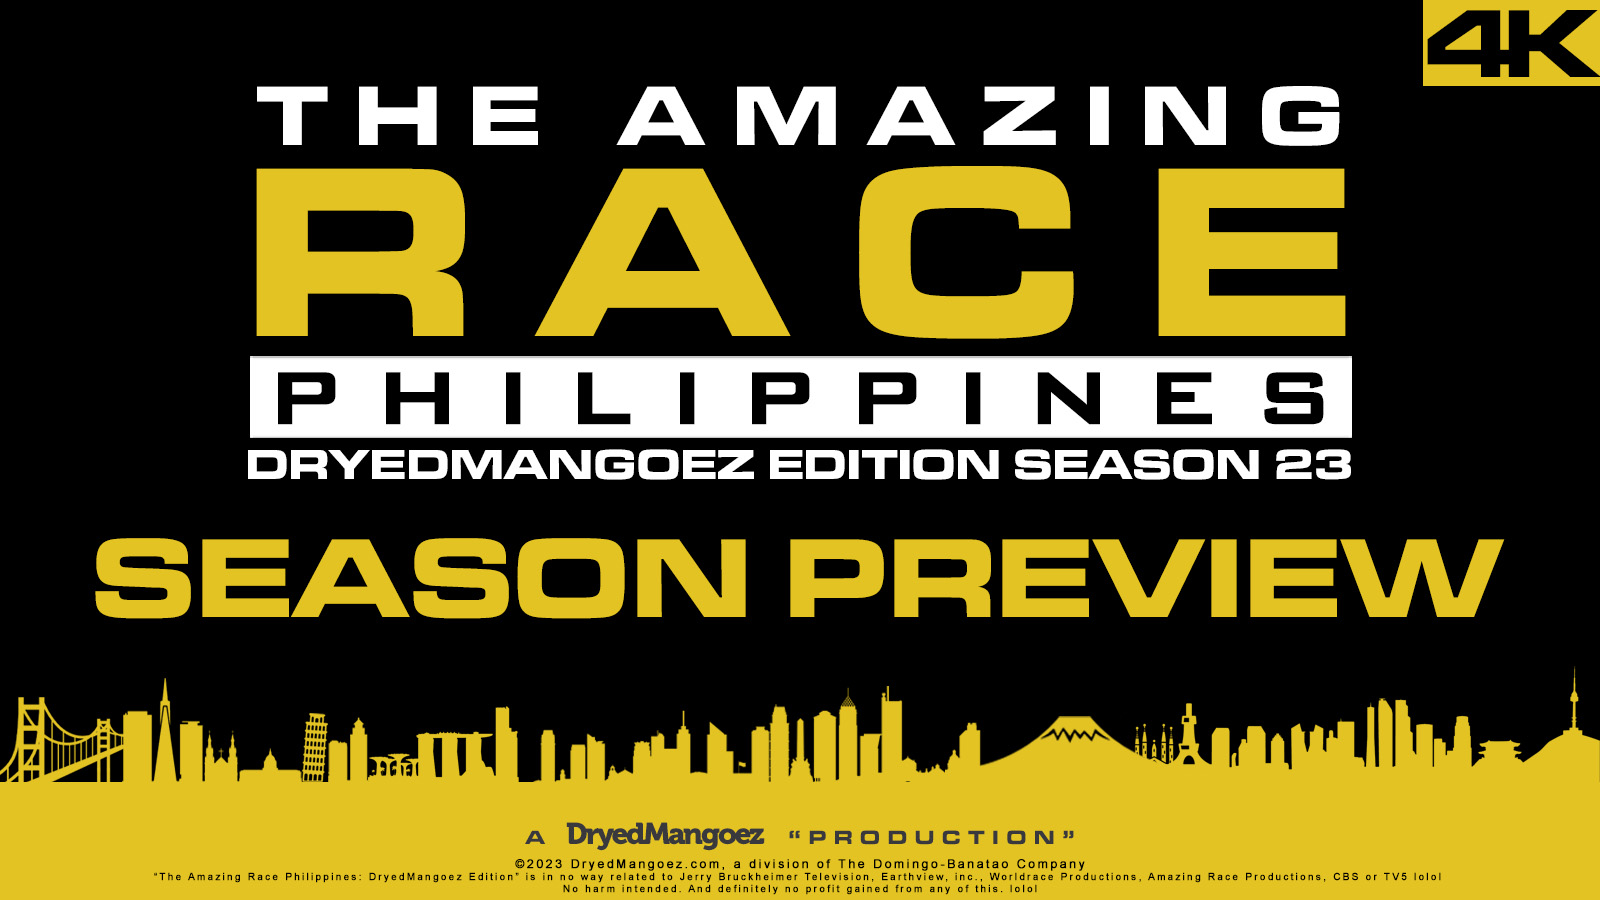 The Amazing Race Philippines: DryedMangoez Edition 23 Season Preview